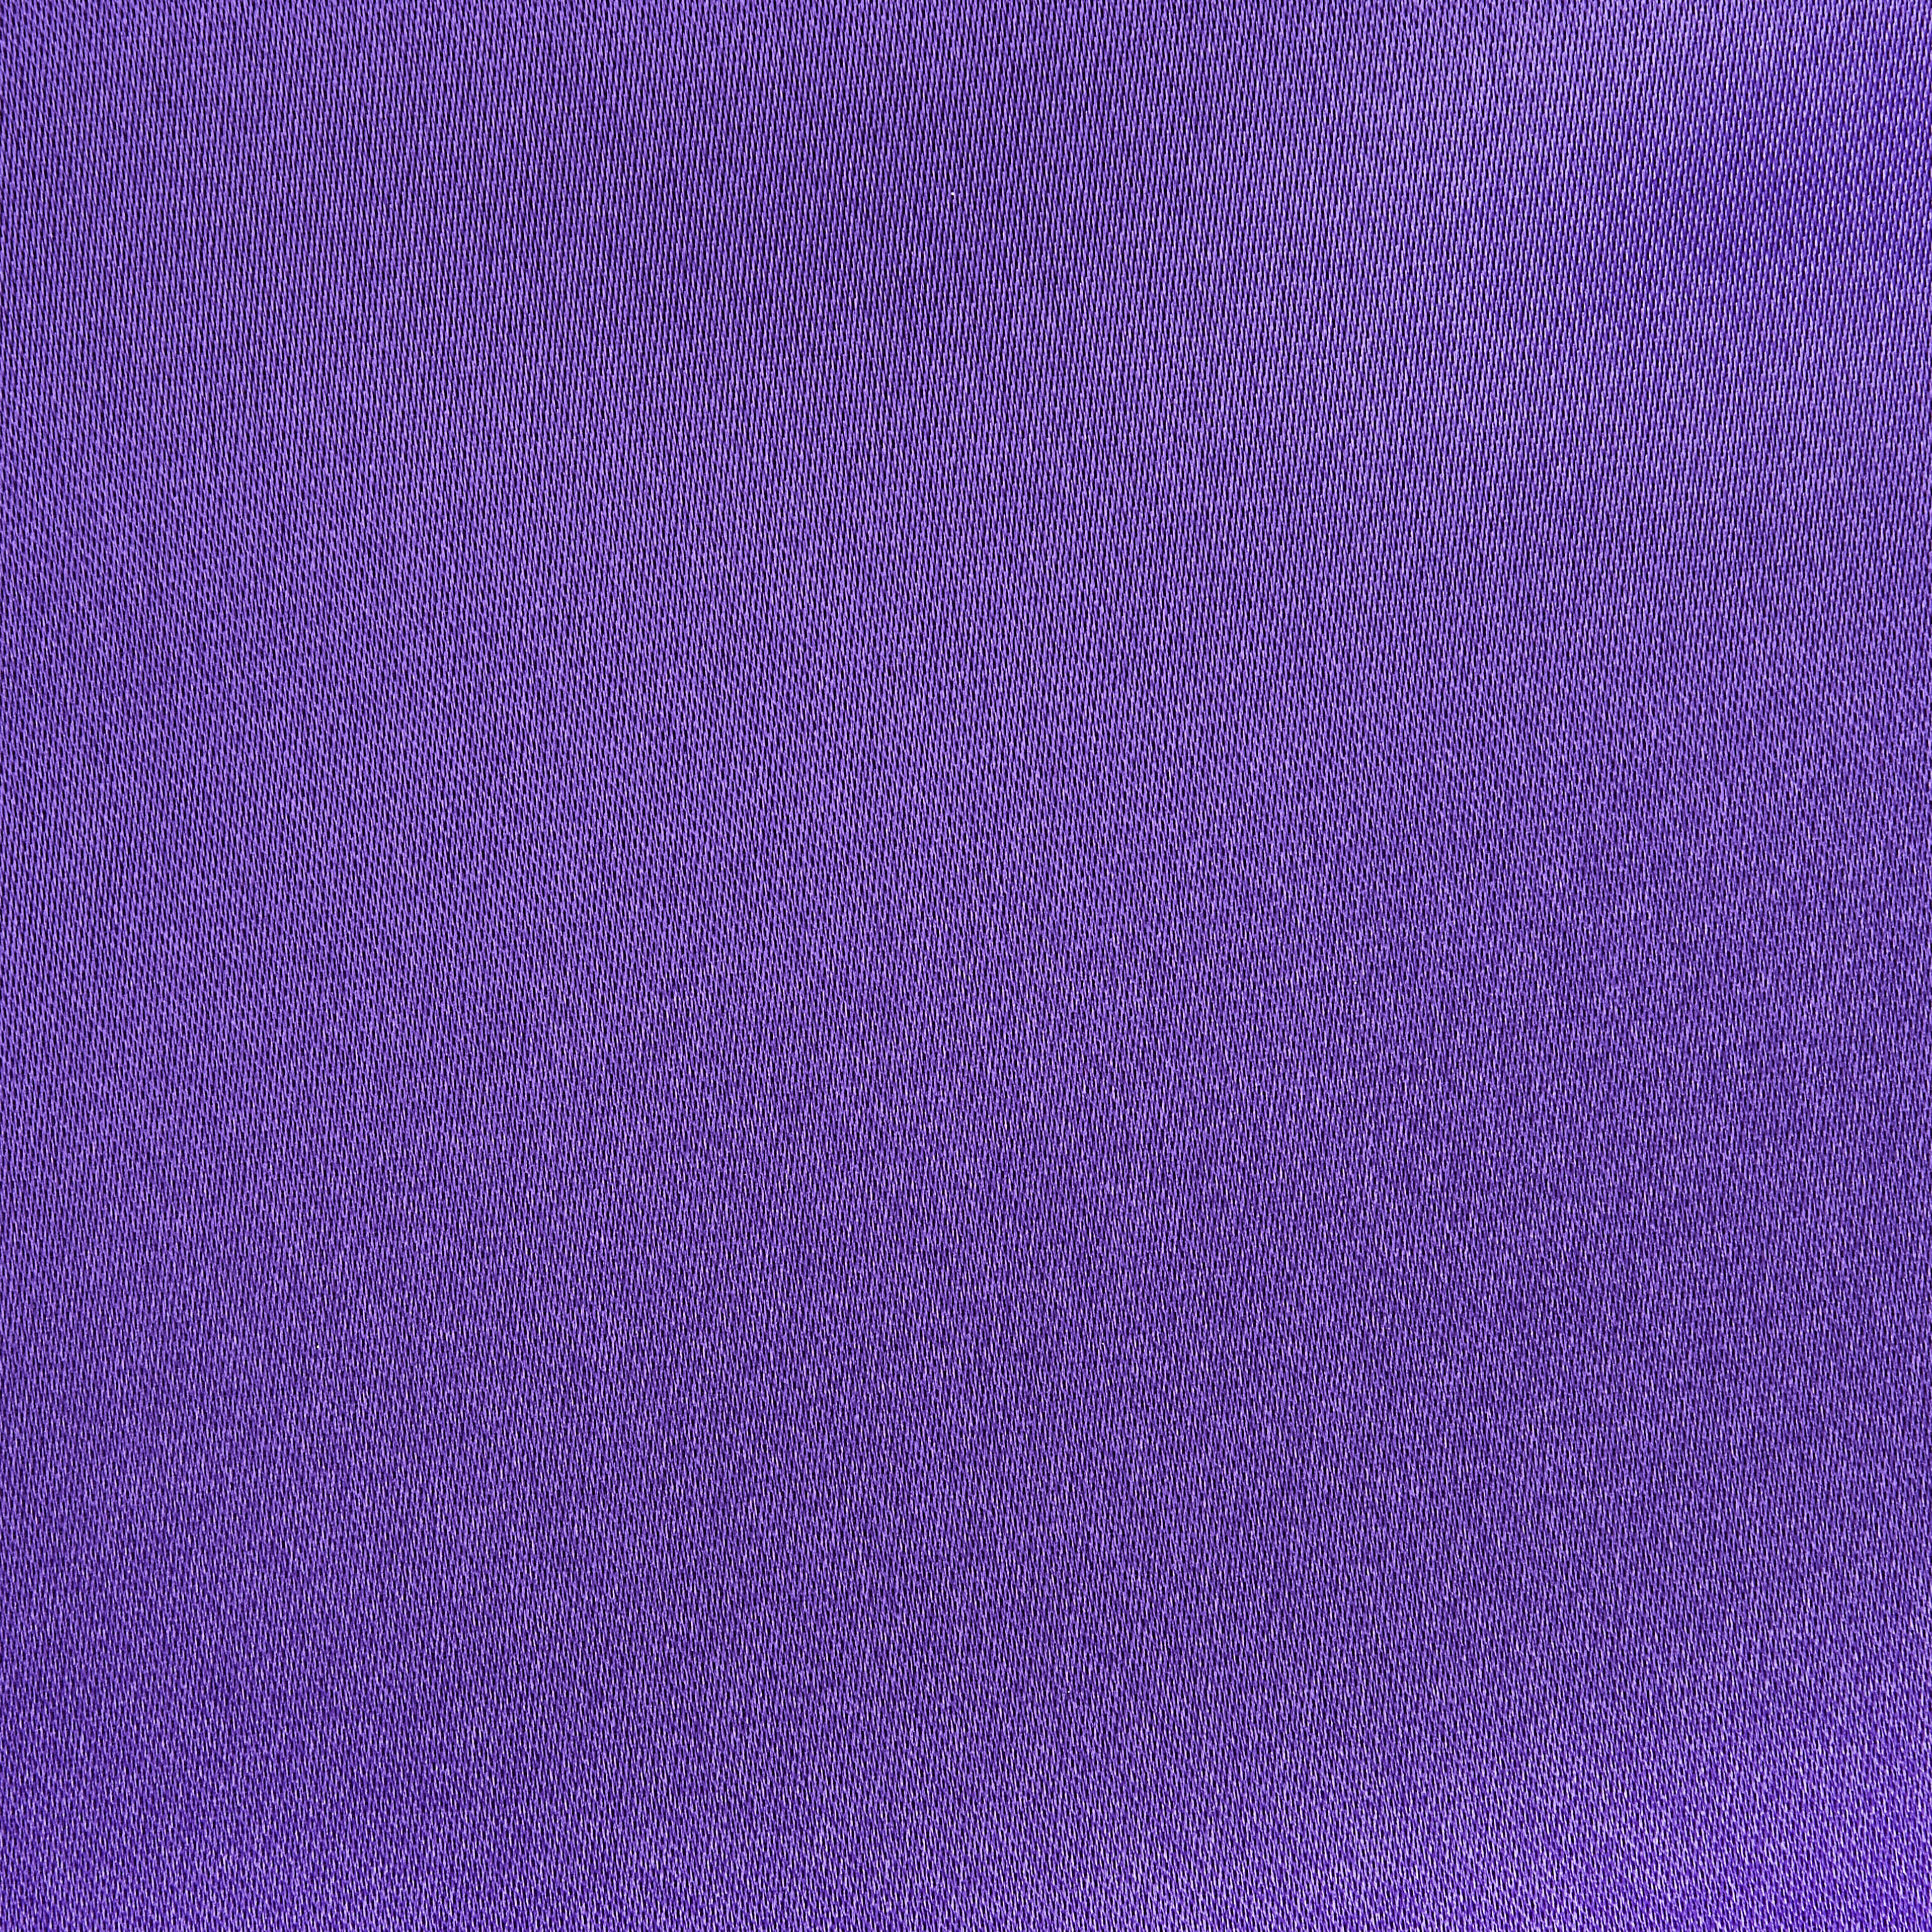 Purple Costume Satin